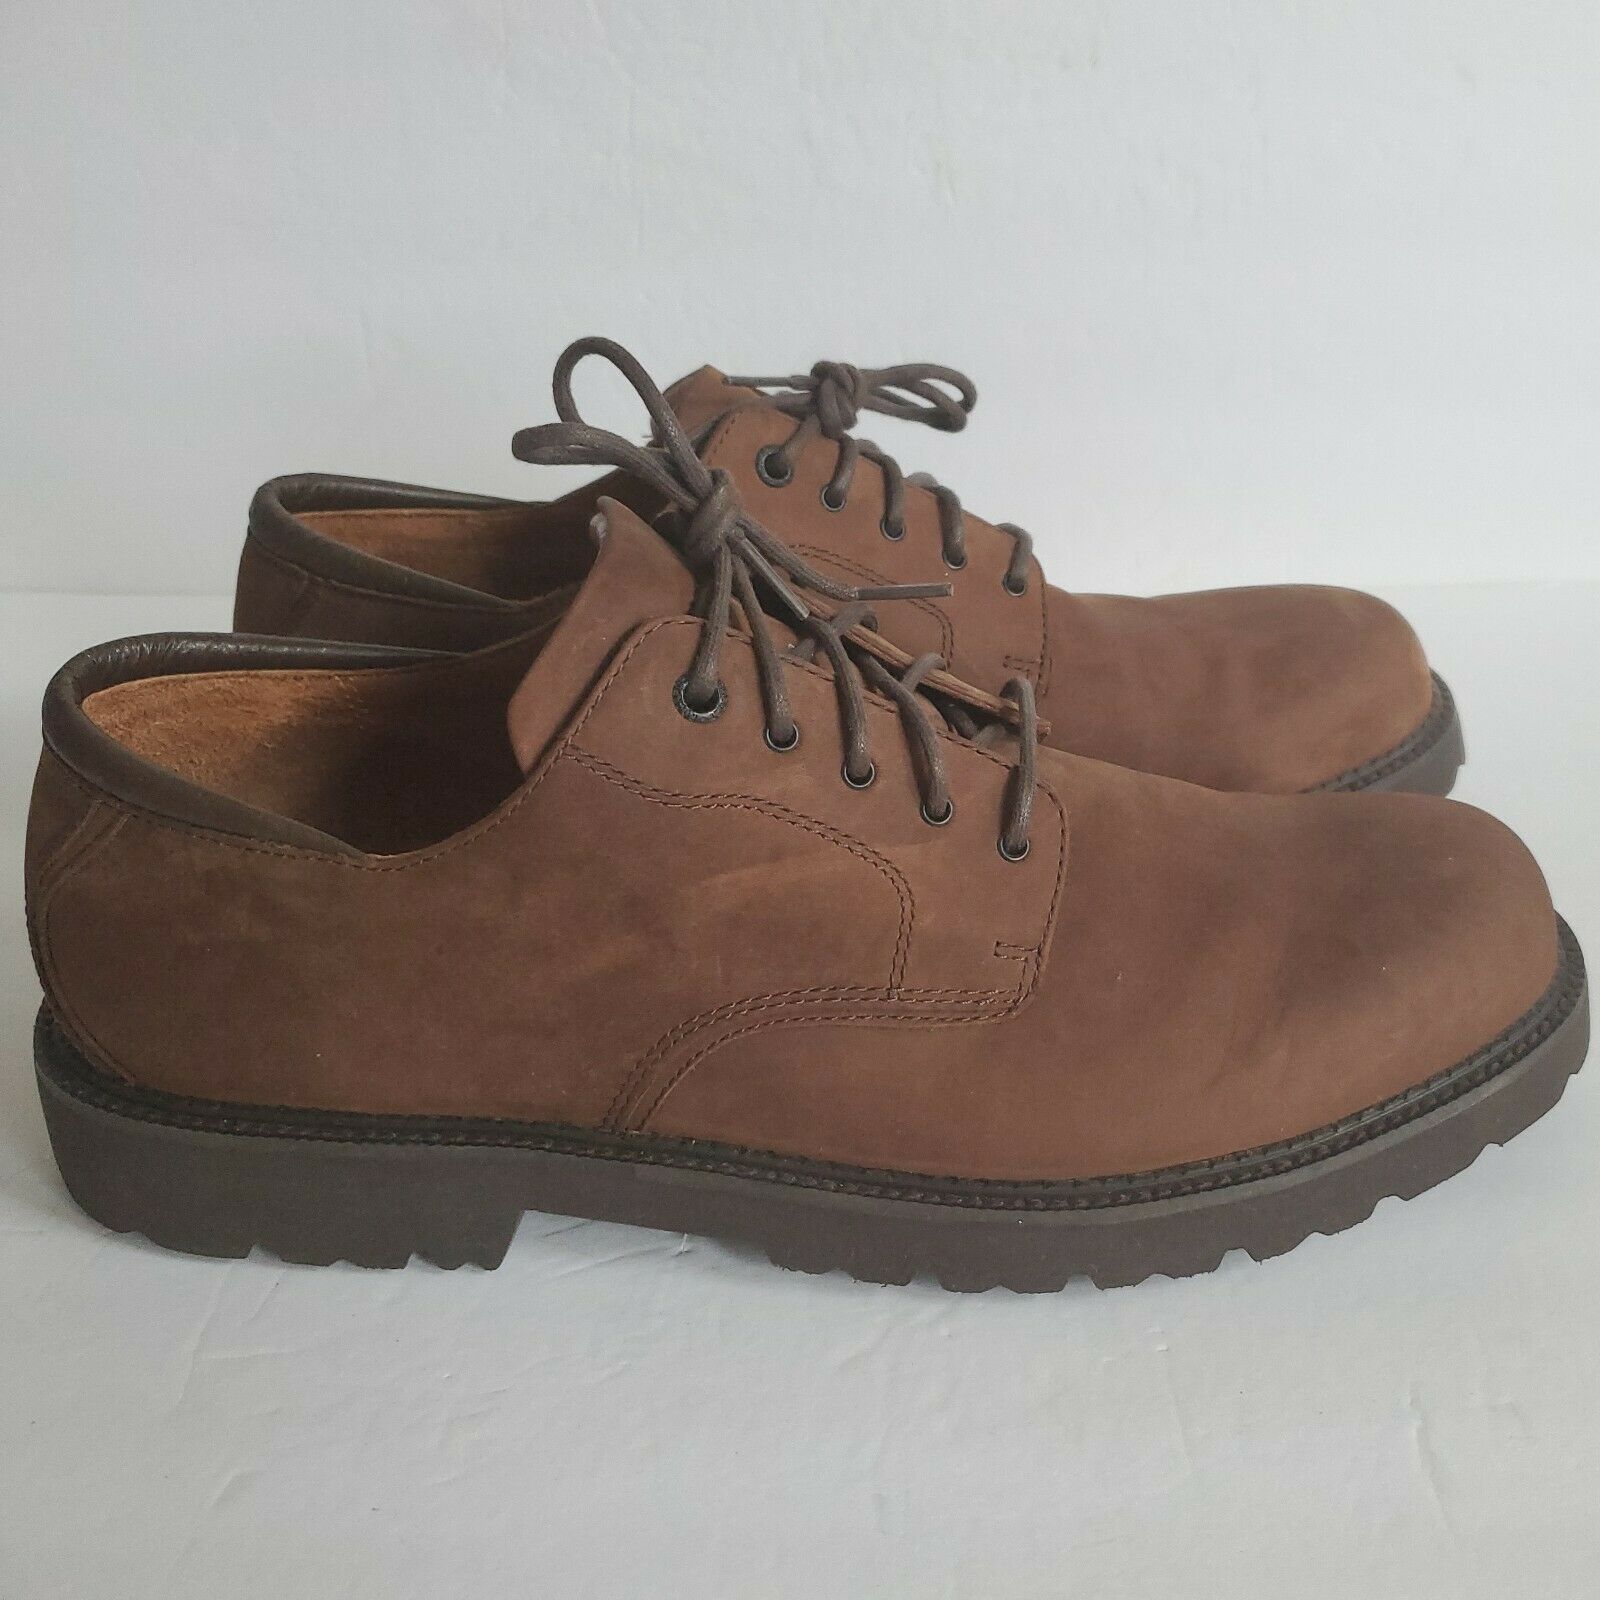 ROCKPORT LOUISIANA Men's M4119 Waterproof Casual Brown Shoes Size 13 M - EUC